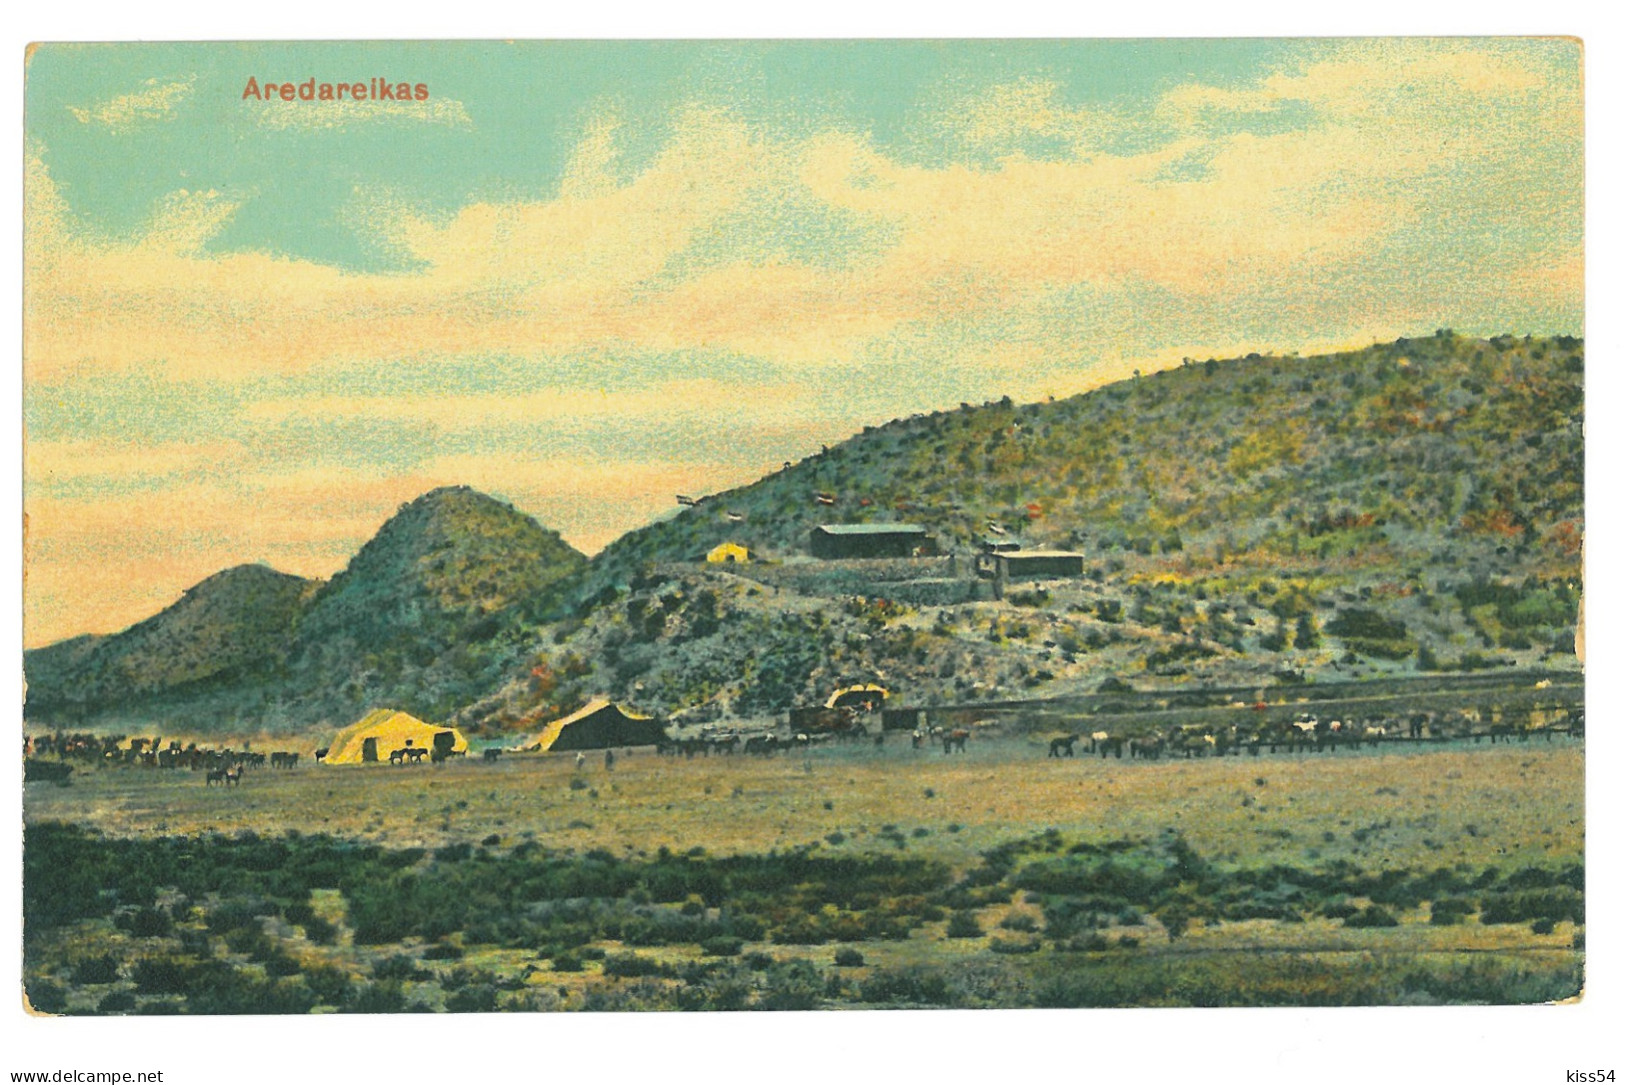 NAM 5 - 23913 AREDAREIKAS, Panorama, D.S.W. Afrika, Namibia - Old Postcard - Unused - Namibie